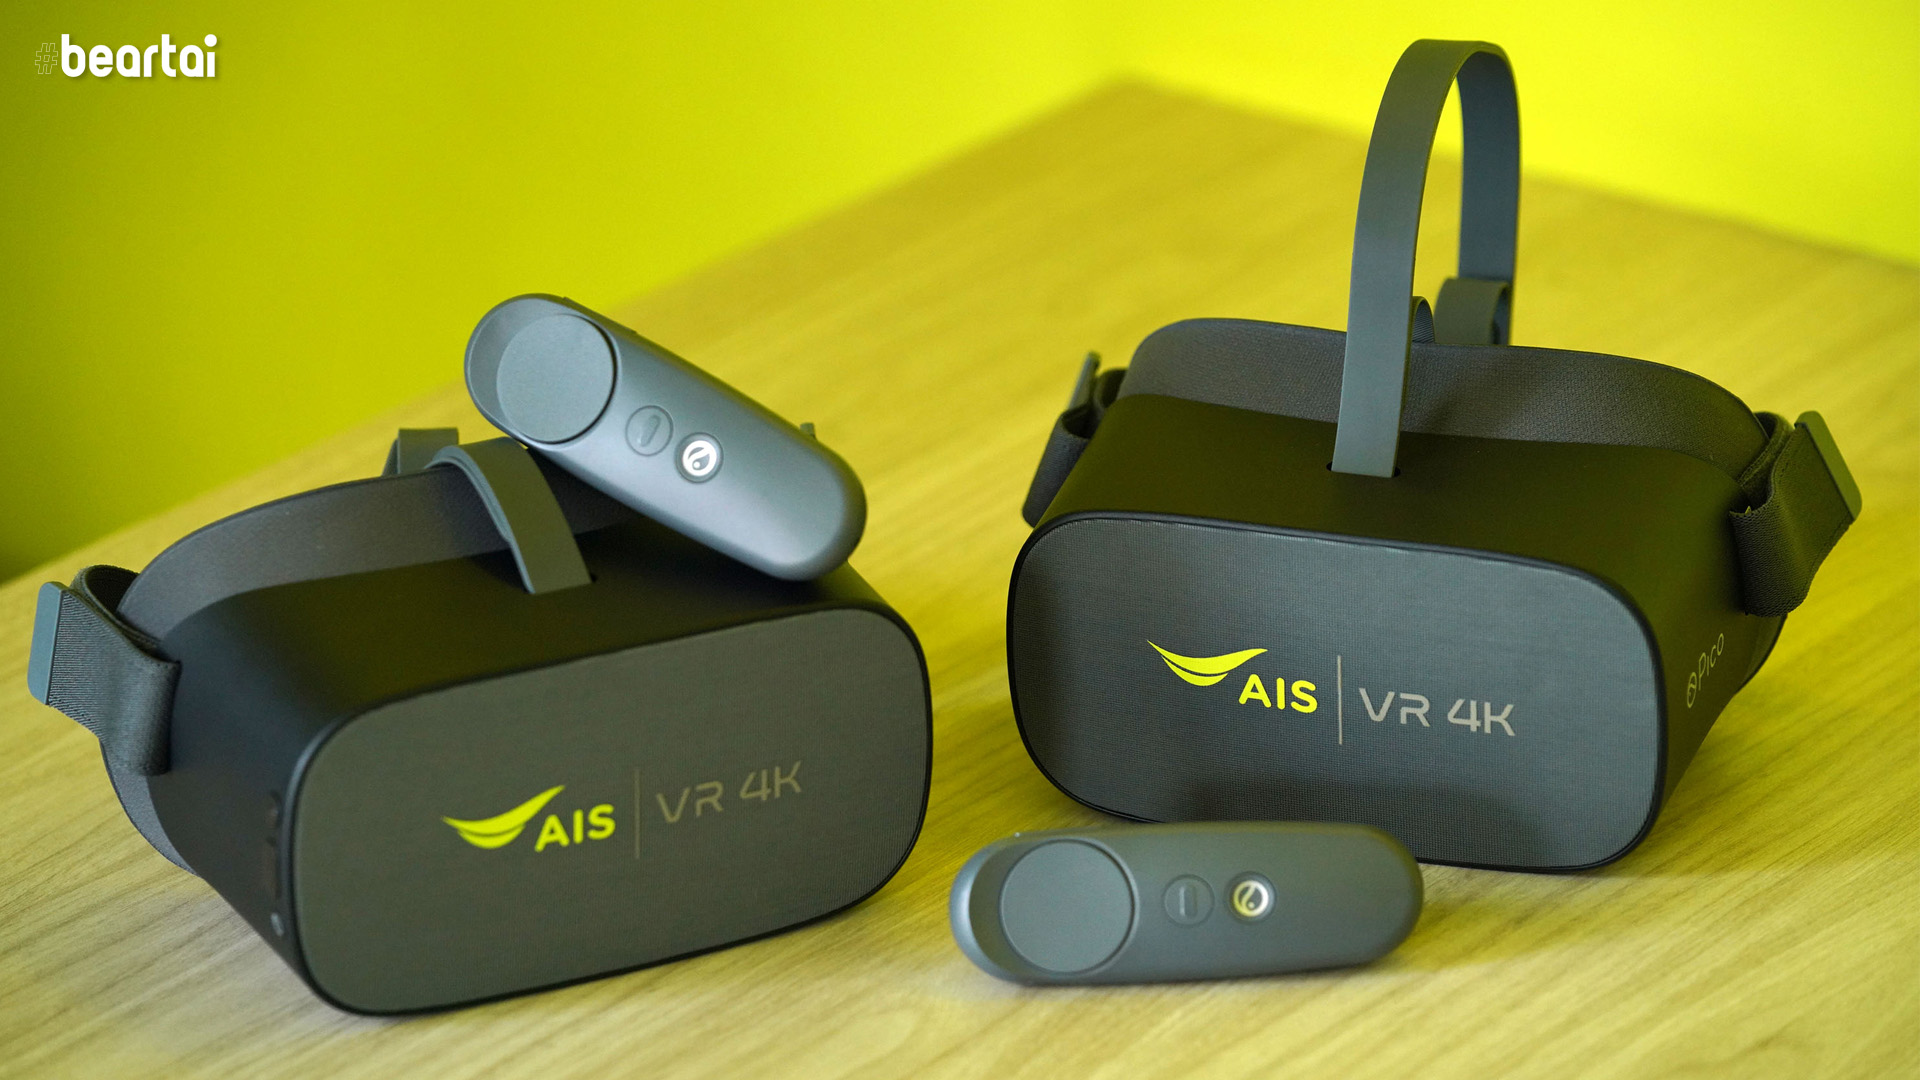 AIS โชว์ล้ำ จัดจริง “The First 5G VR live streaming” รุกเปิดตลาด VR Content พลิกโฉมอุตสาหกรรมบันเทิงยุค 5G